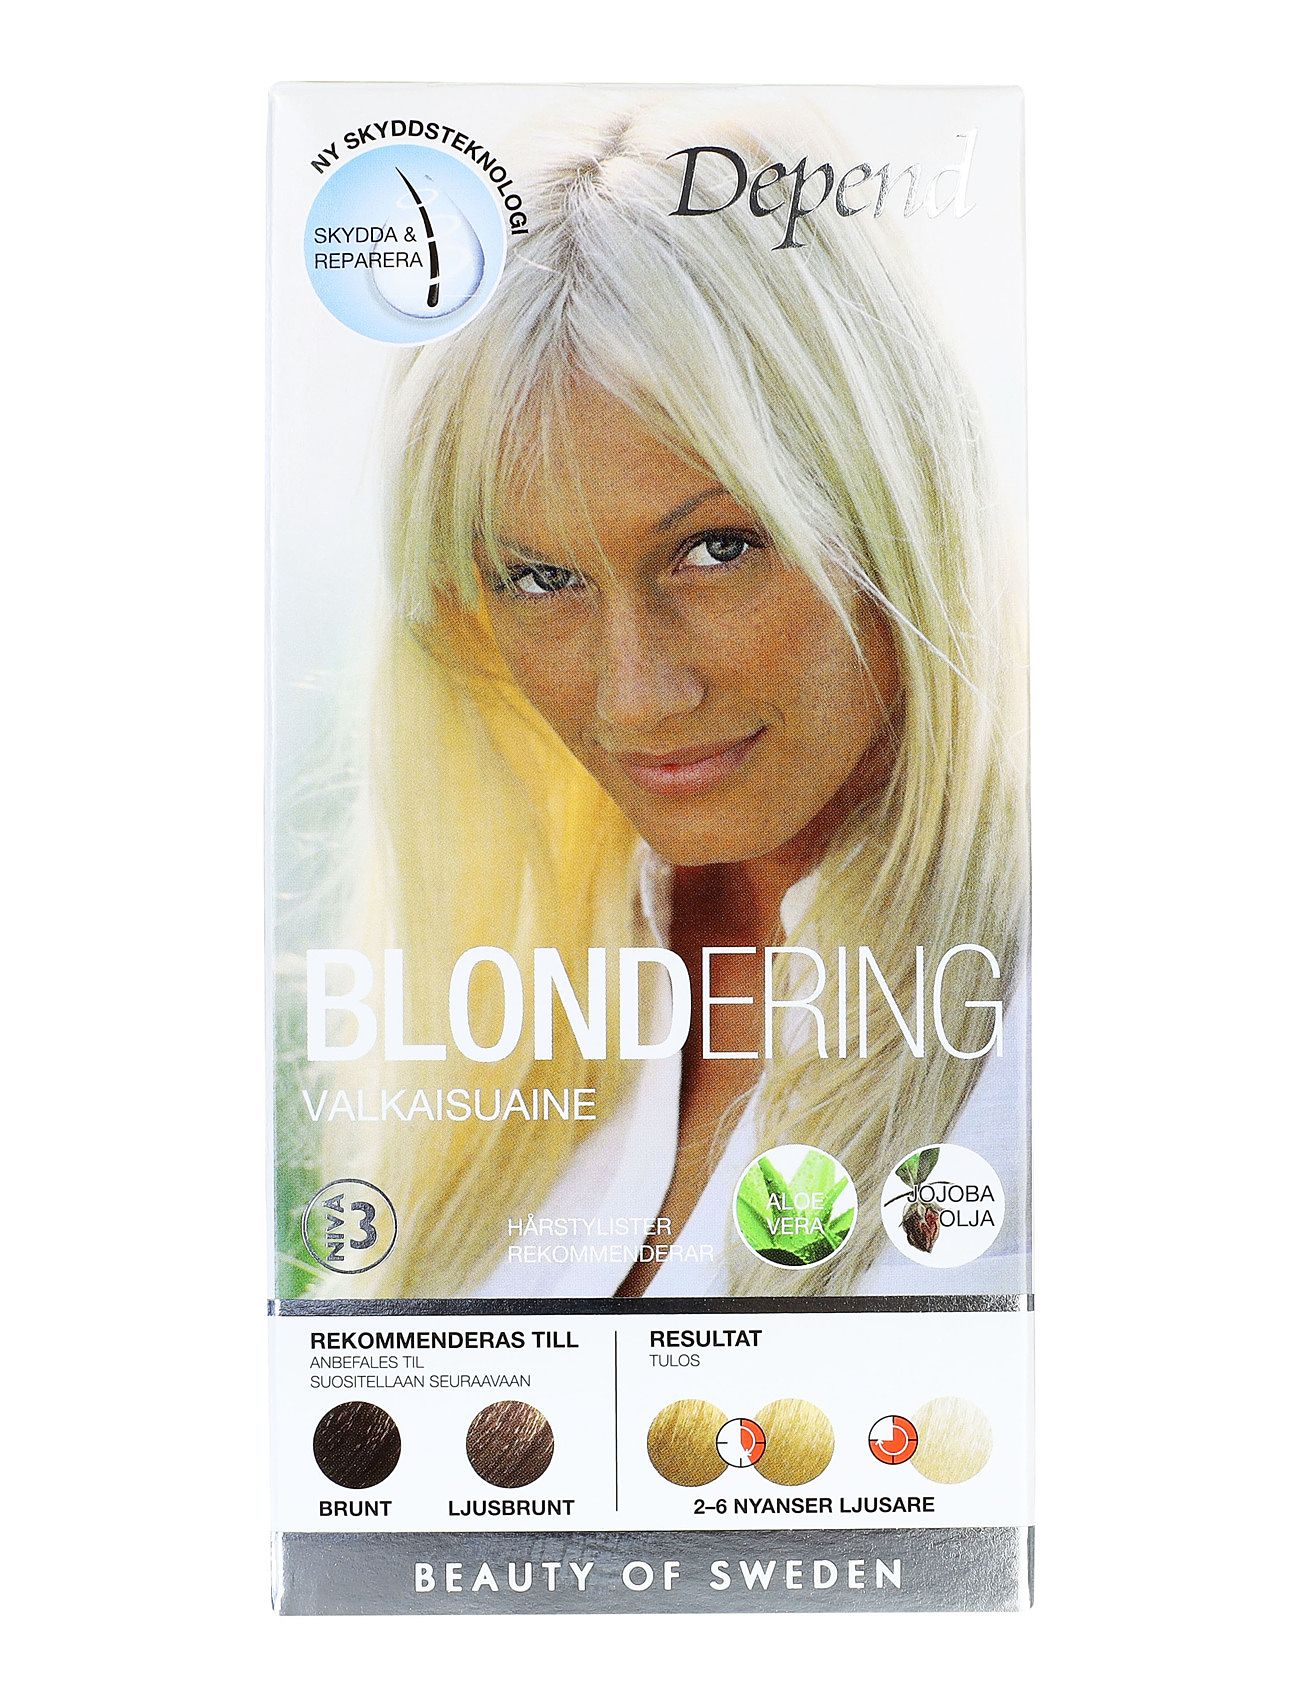 Blondering Brun-Ljusbrun Beauty Women Hair Care Color Treatments Nude Depend Cosmetic